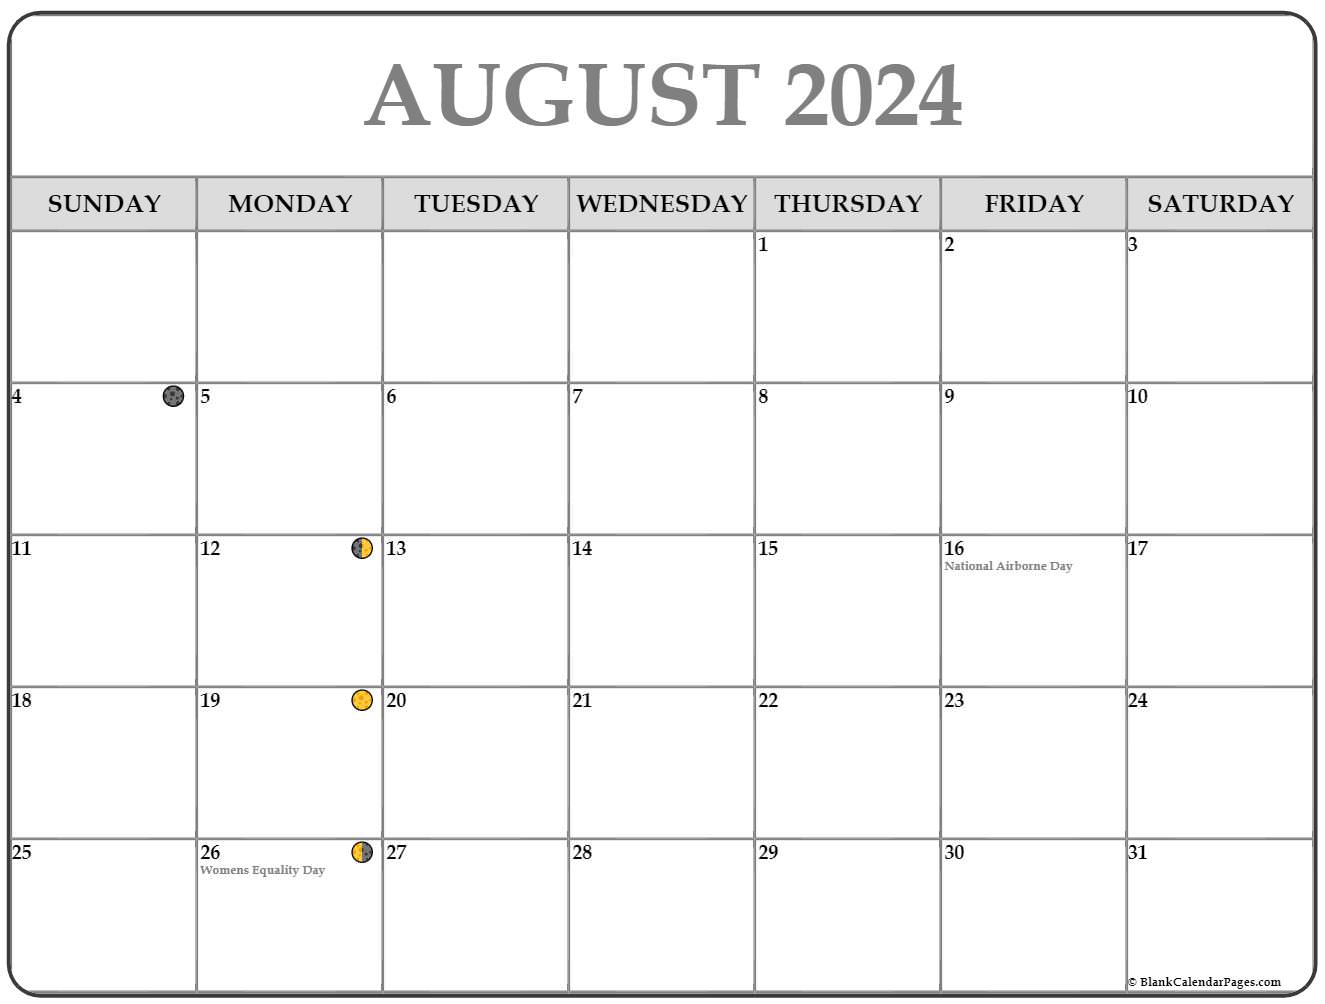 August 2022 Lunar Calendar Moon Phase Calendar